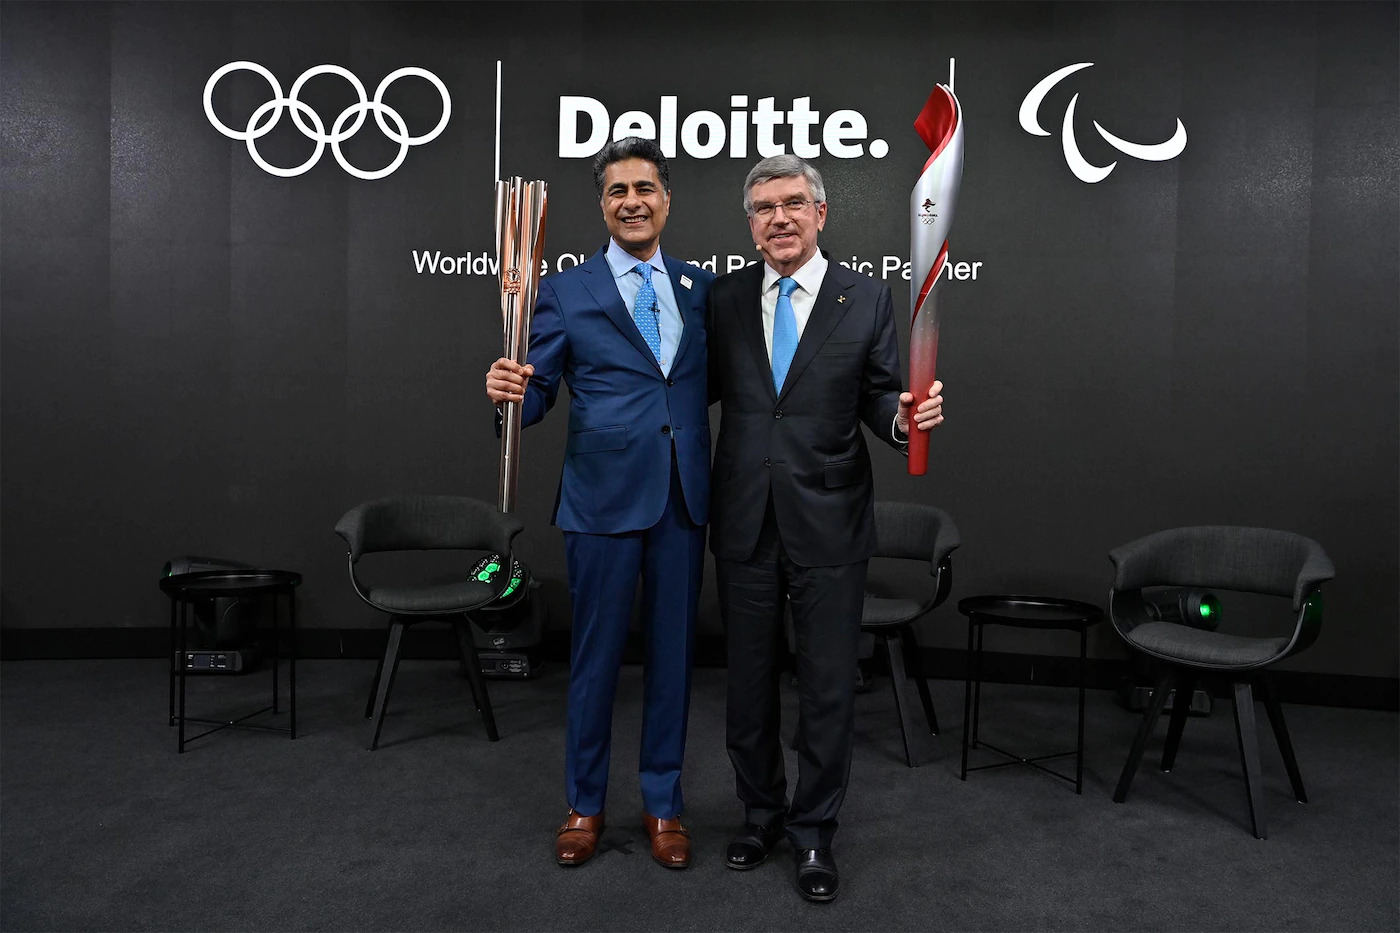 IOC / Christophe Moratal - Punit Renjen, Deloitte Global CEO and Thomas Bach, IOC President